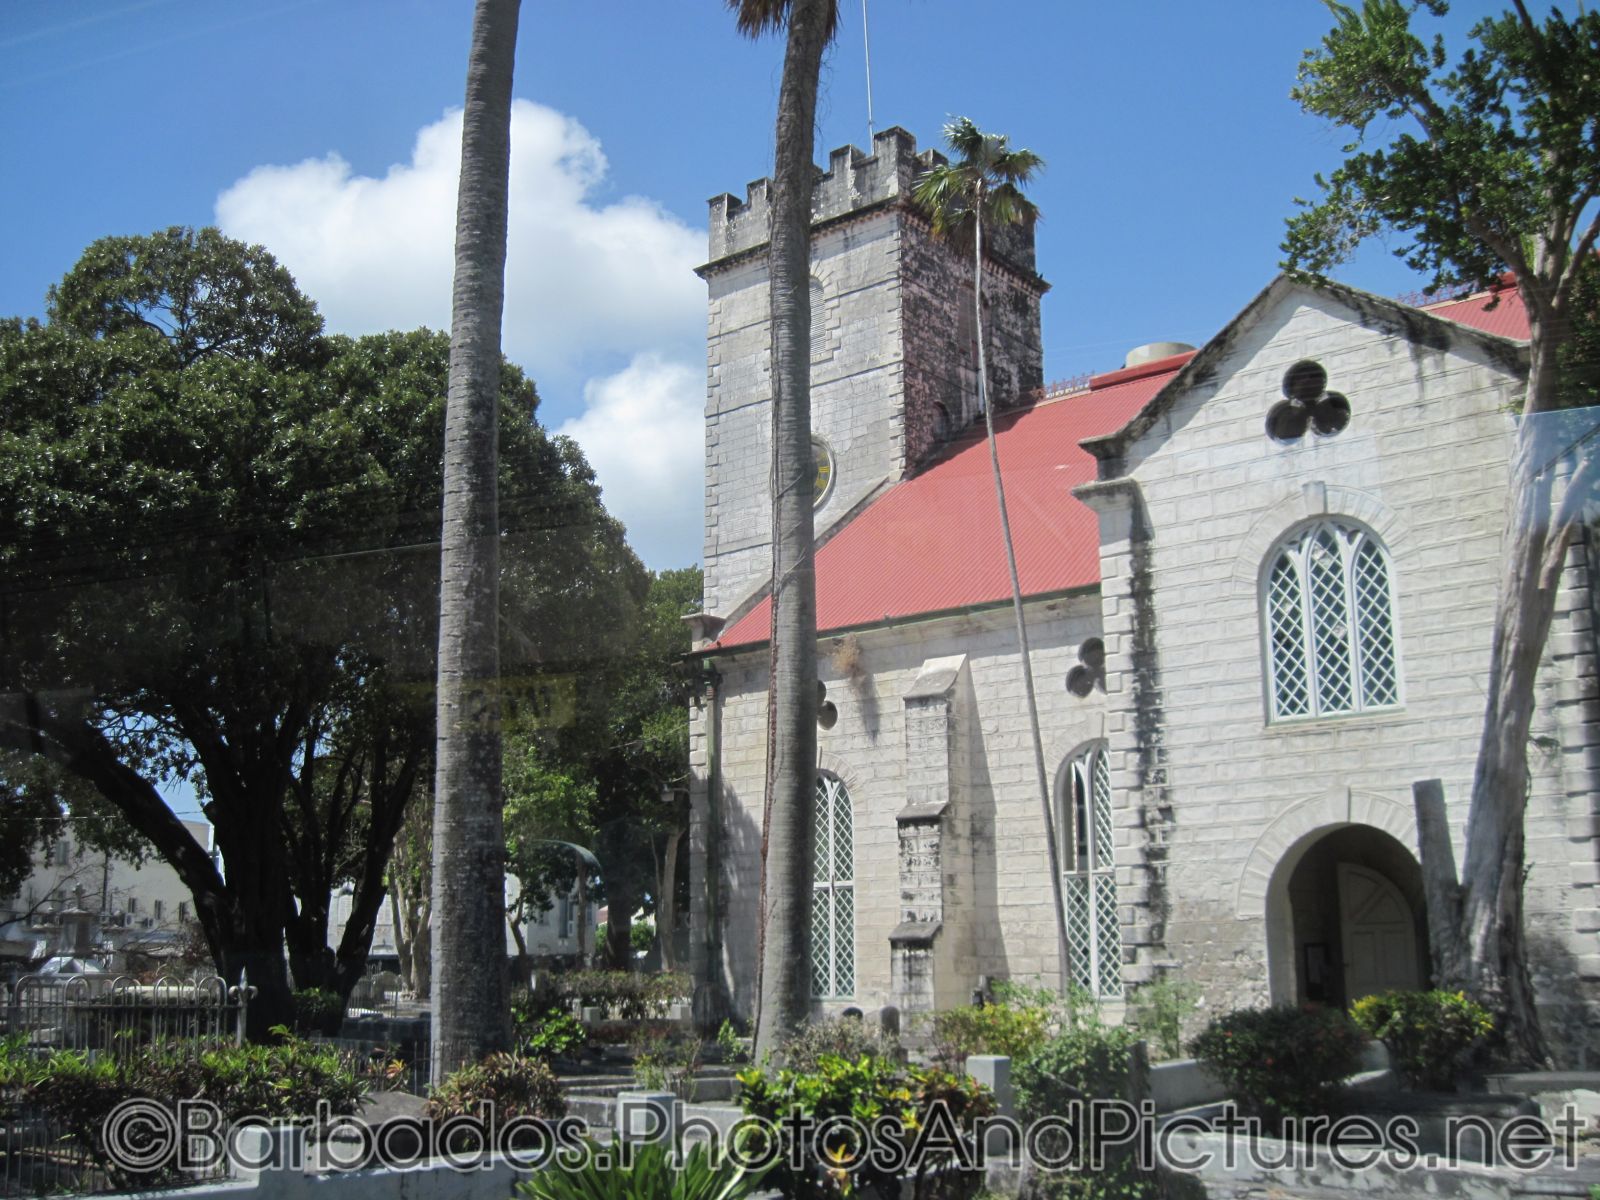 Church in Barbados.jpg
